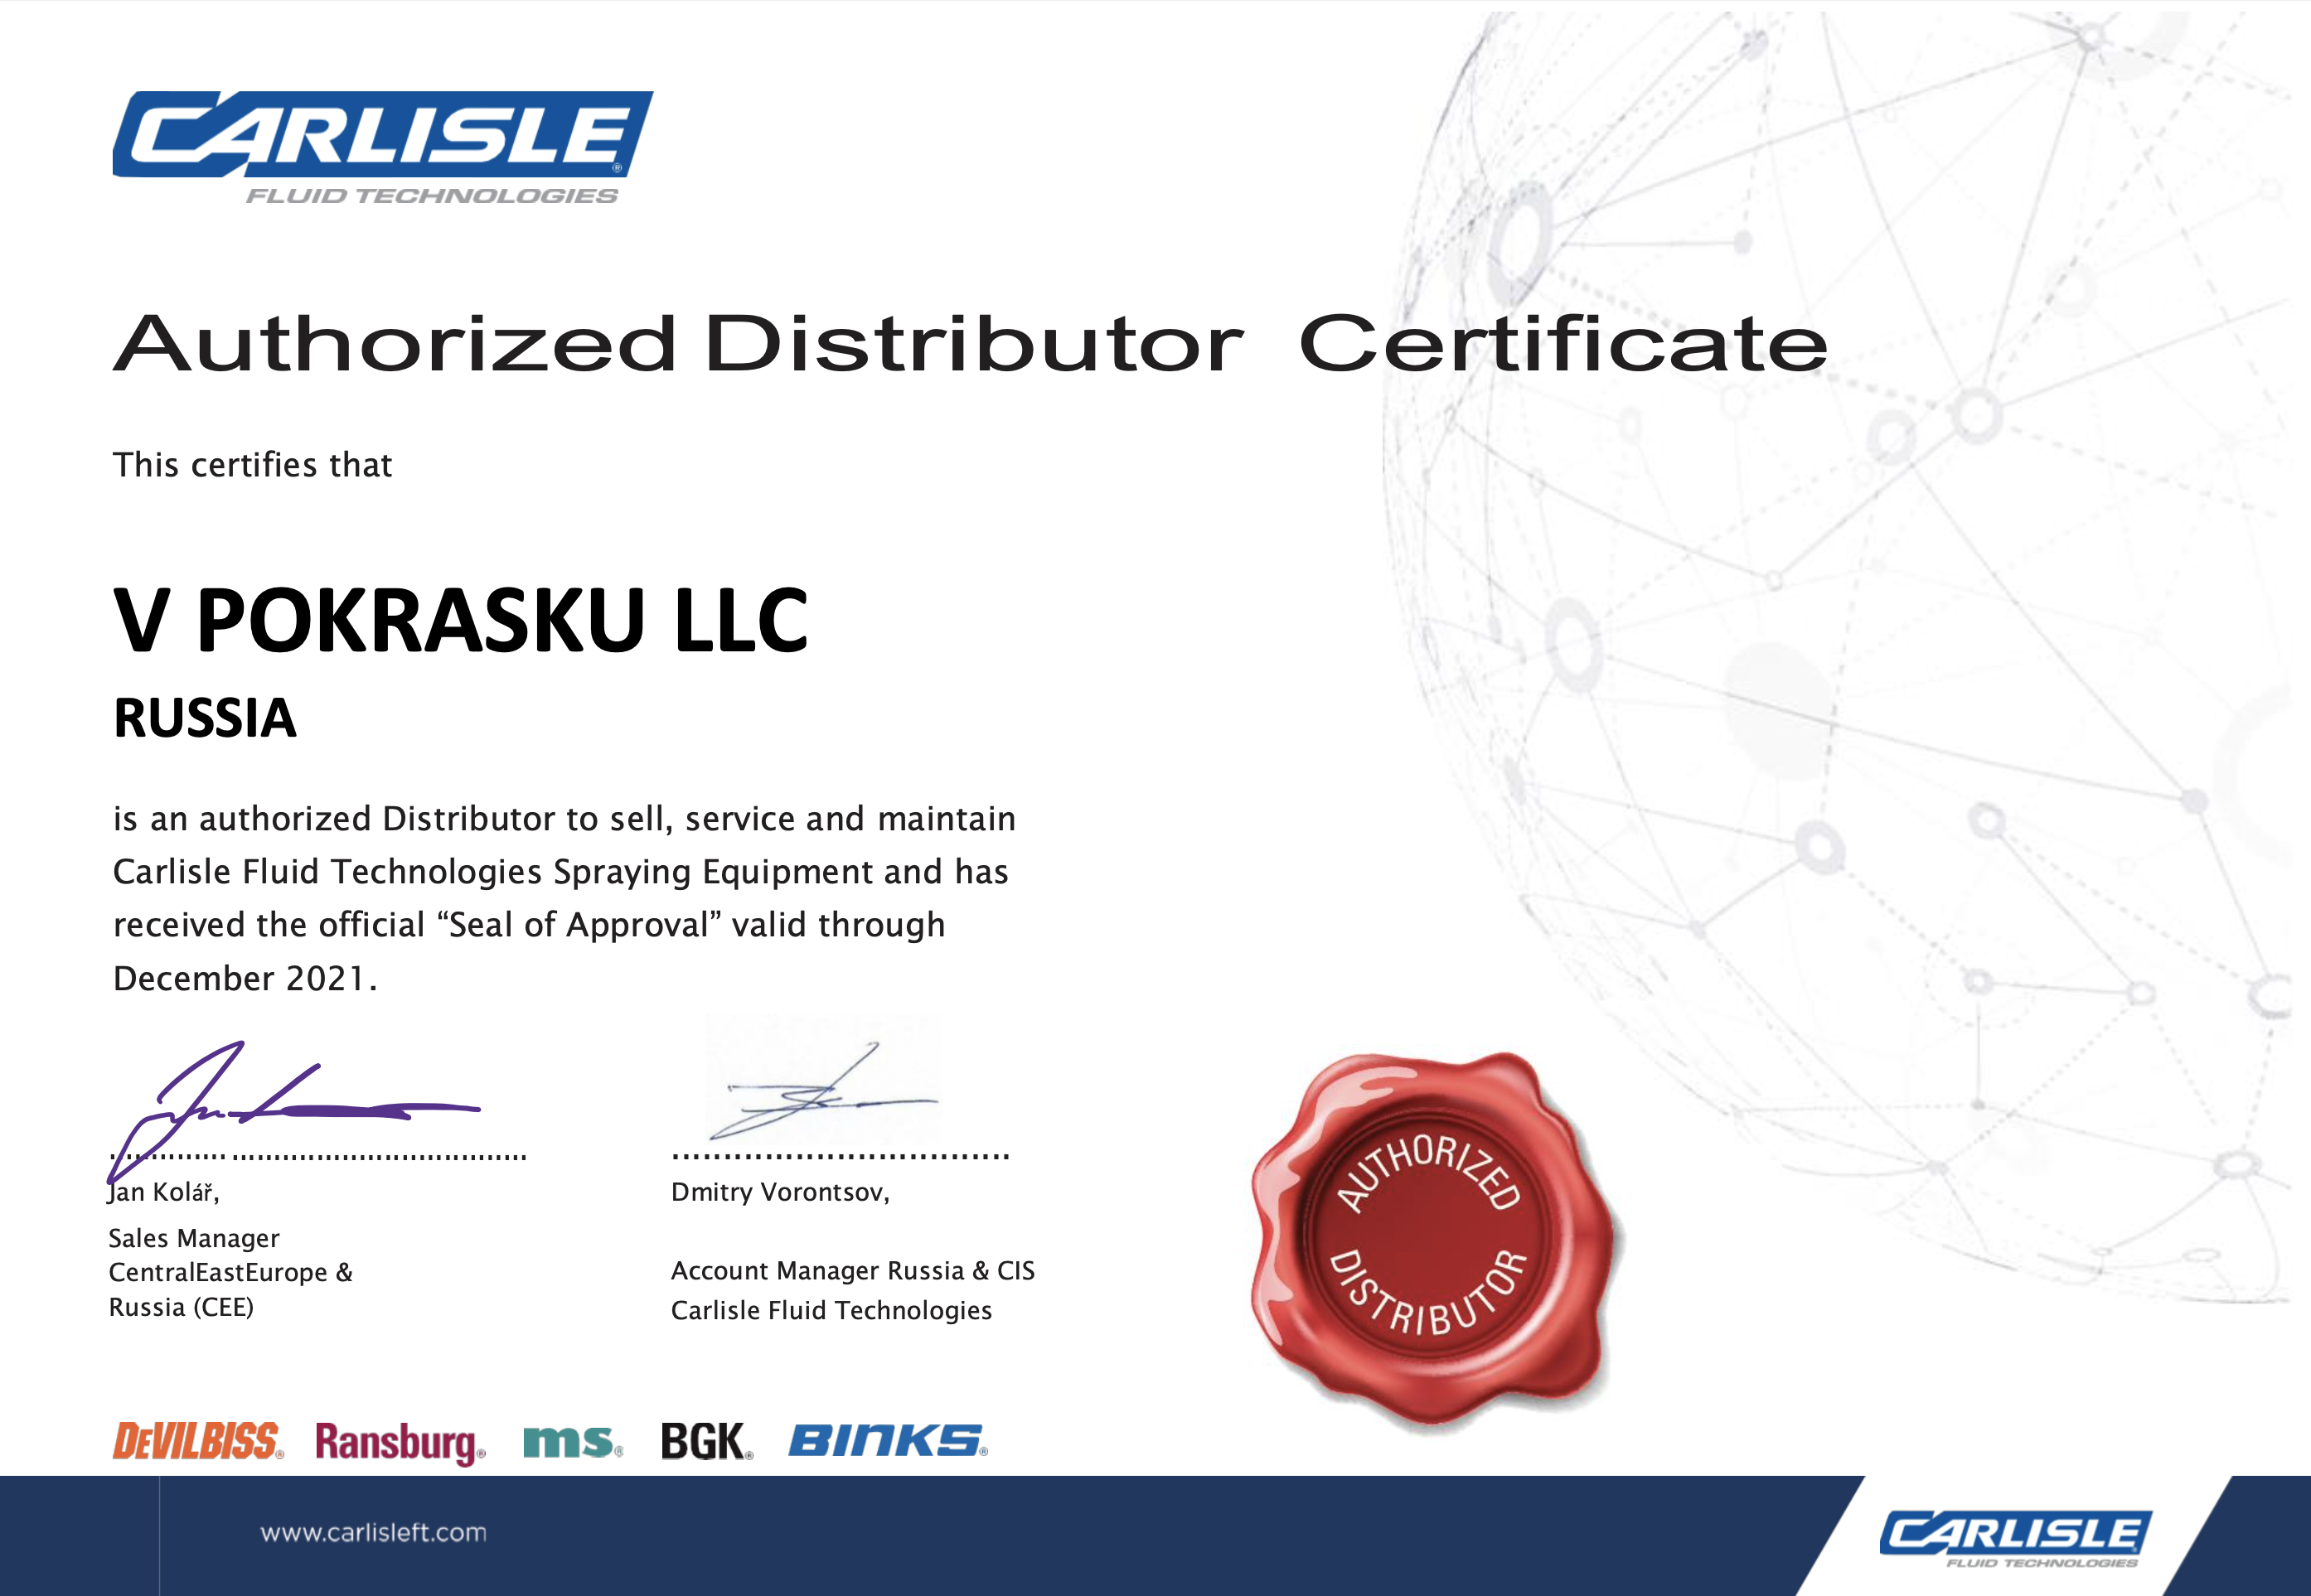 Сертификат официального дистрибьютора DeVilbiss Ransburg MS BGK Binks V Pokrasku LLC